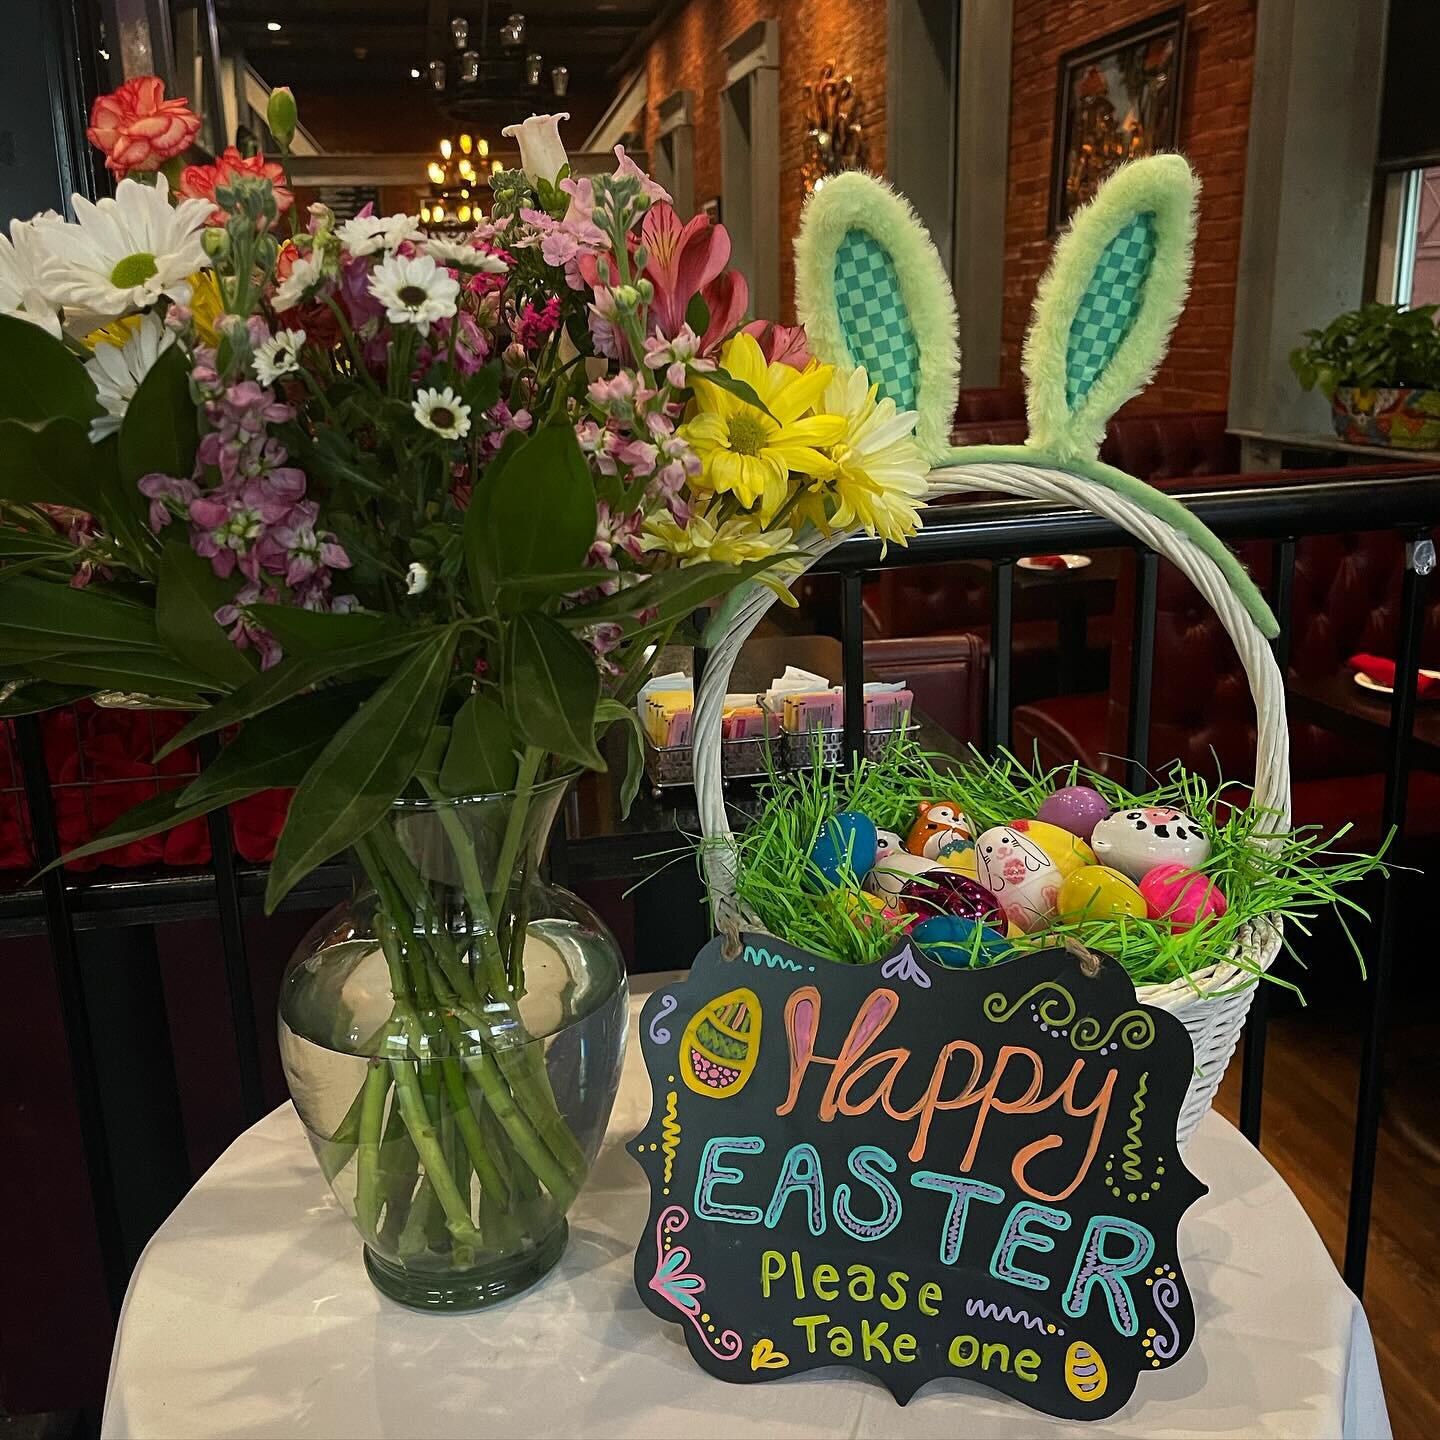 Happy Easter Sunday everyone! 

We will be open today 8 am - 3 pm! 💐🐣

#elmejorcafemckinney #elmejorcafe #coffeemckinney #dfwcoffee #dfwlatte #coffeeshopsmckinney #coffeeshopdfw #coffeebarmckinney